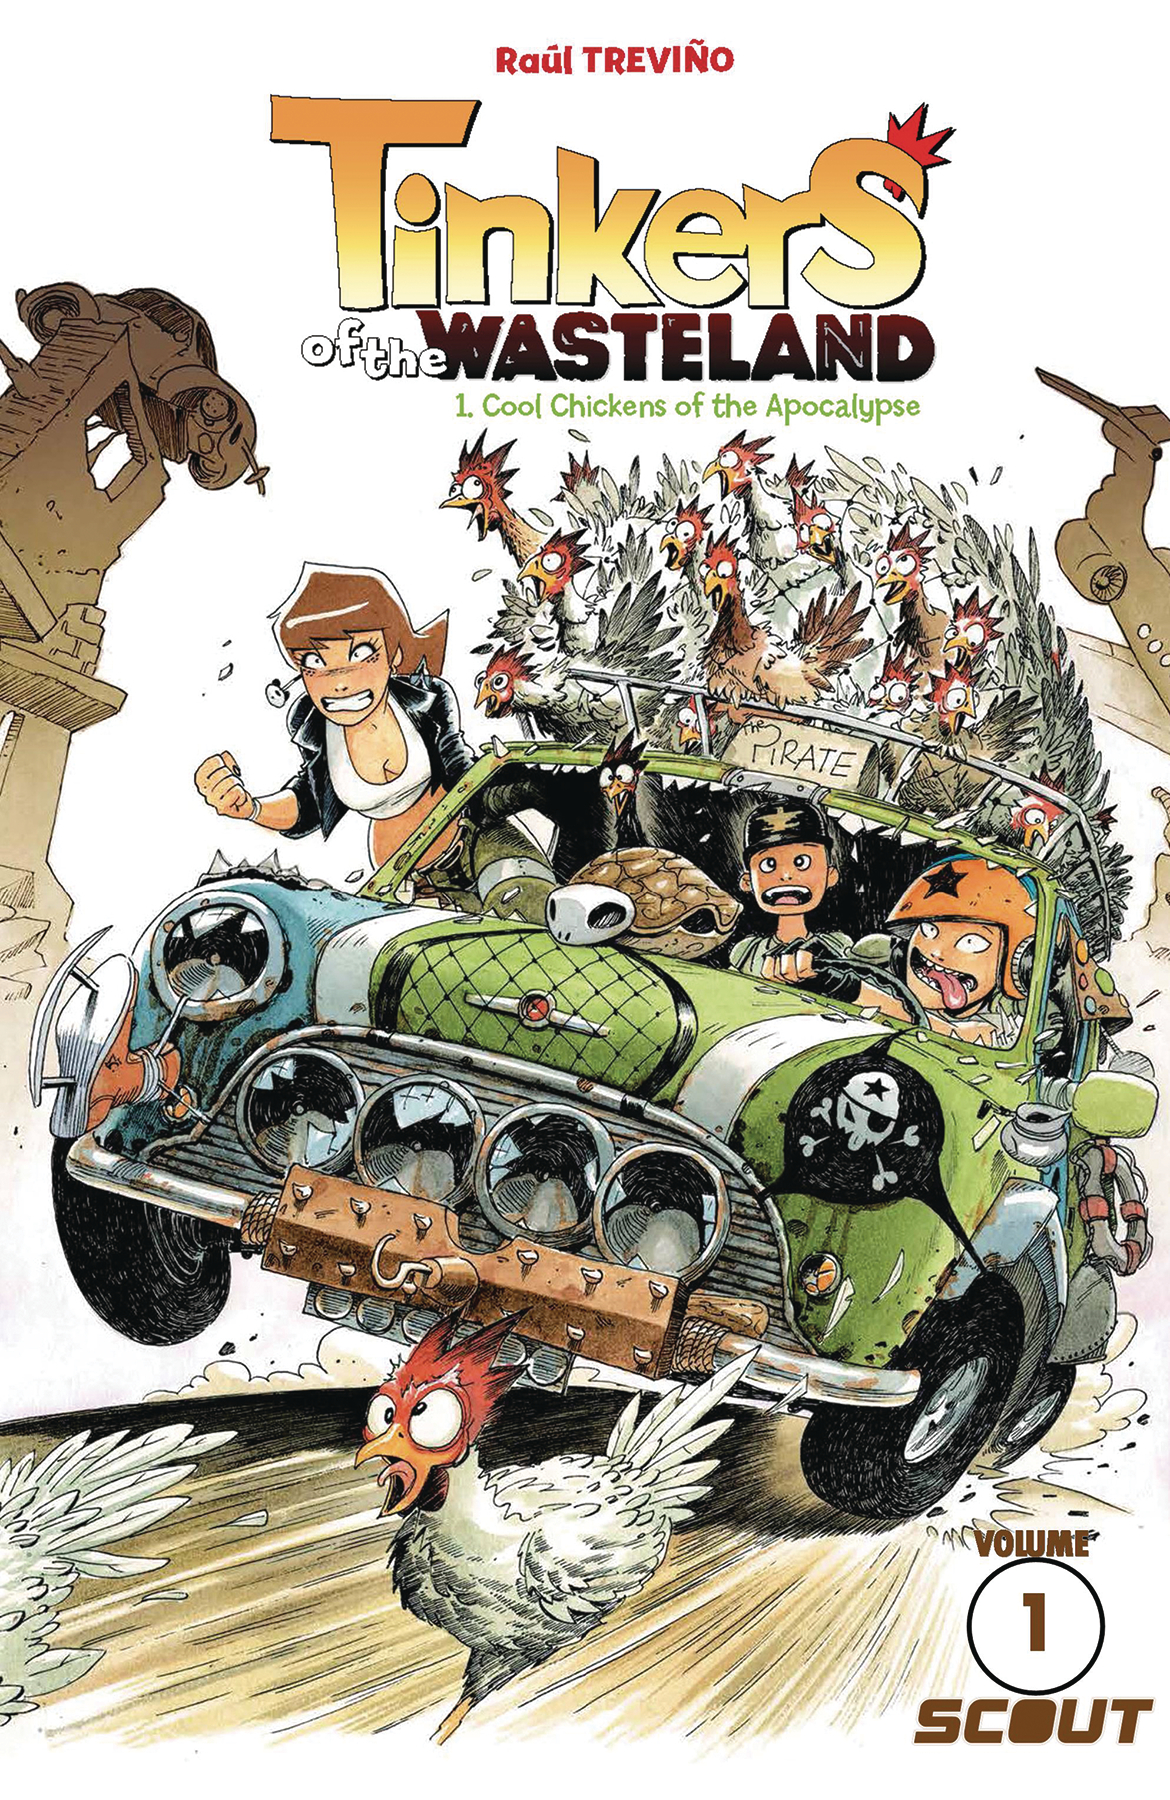 Tinkers of Wasteland Graphic Novel